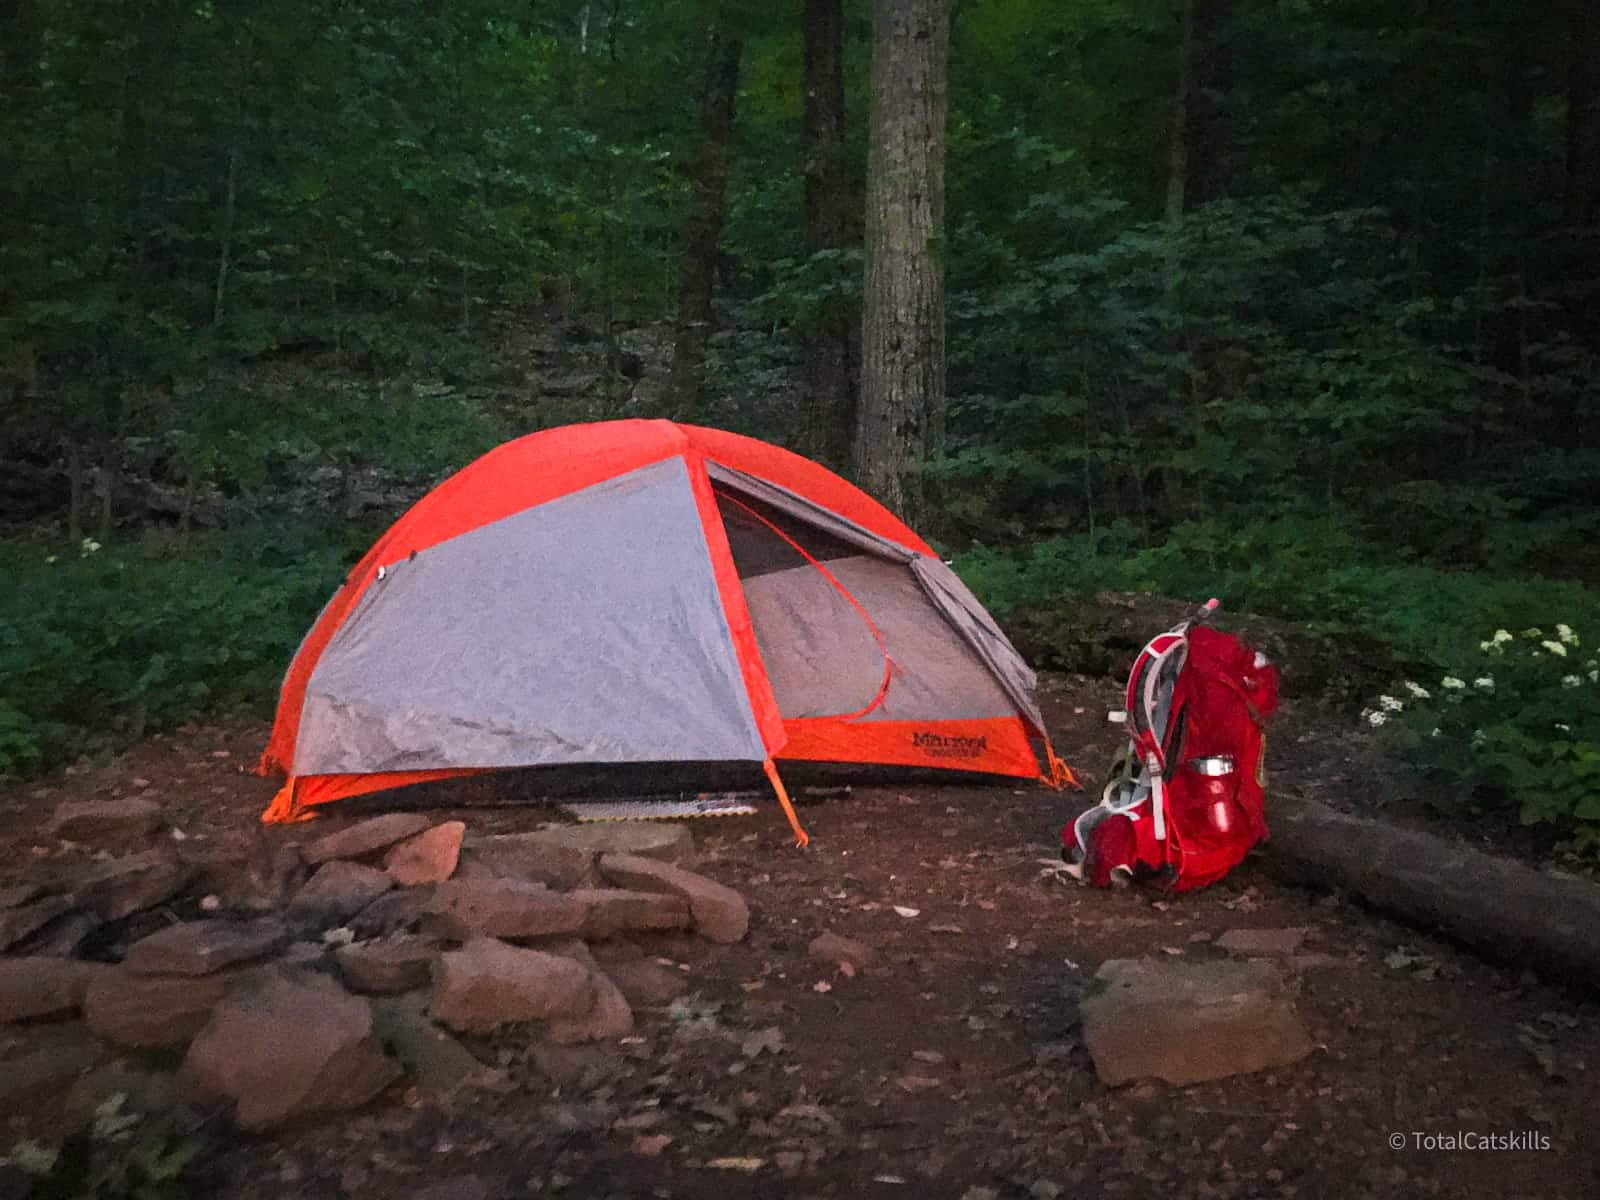 leave no trace: tent in campsite